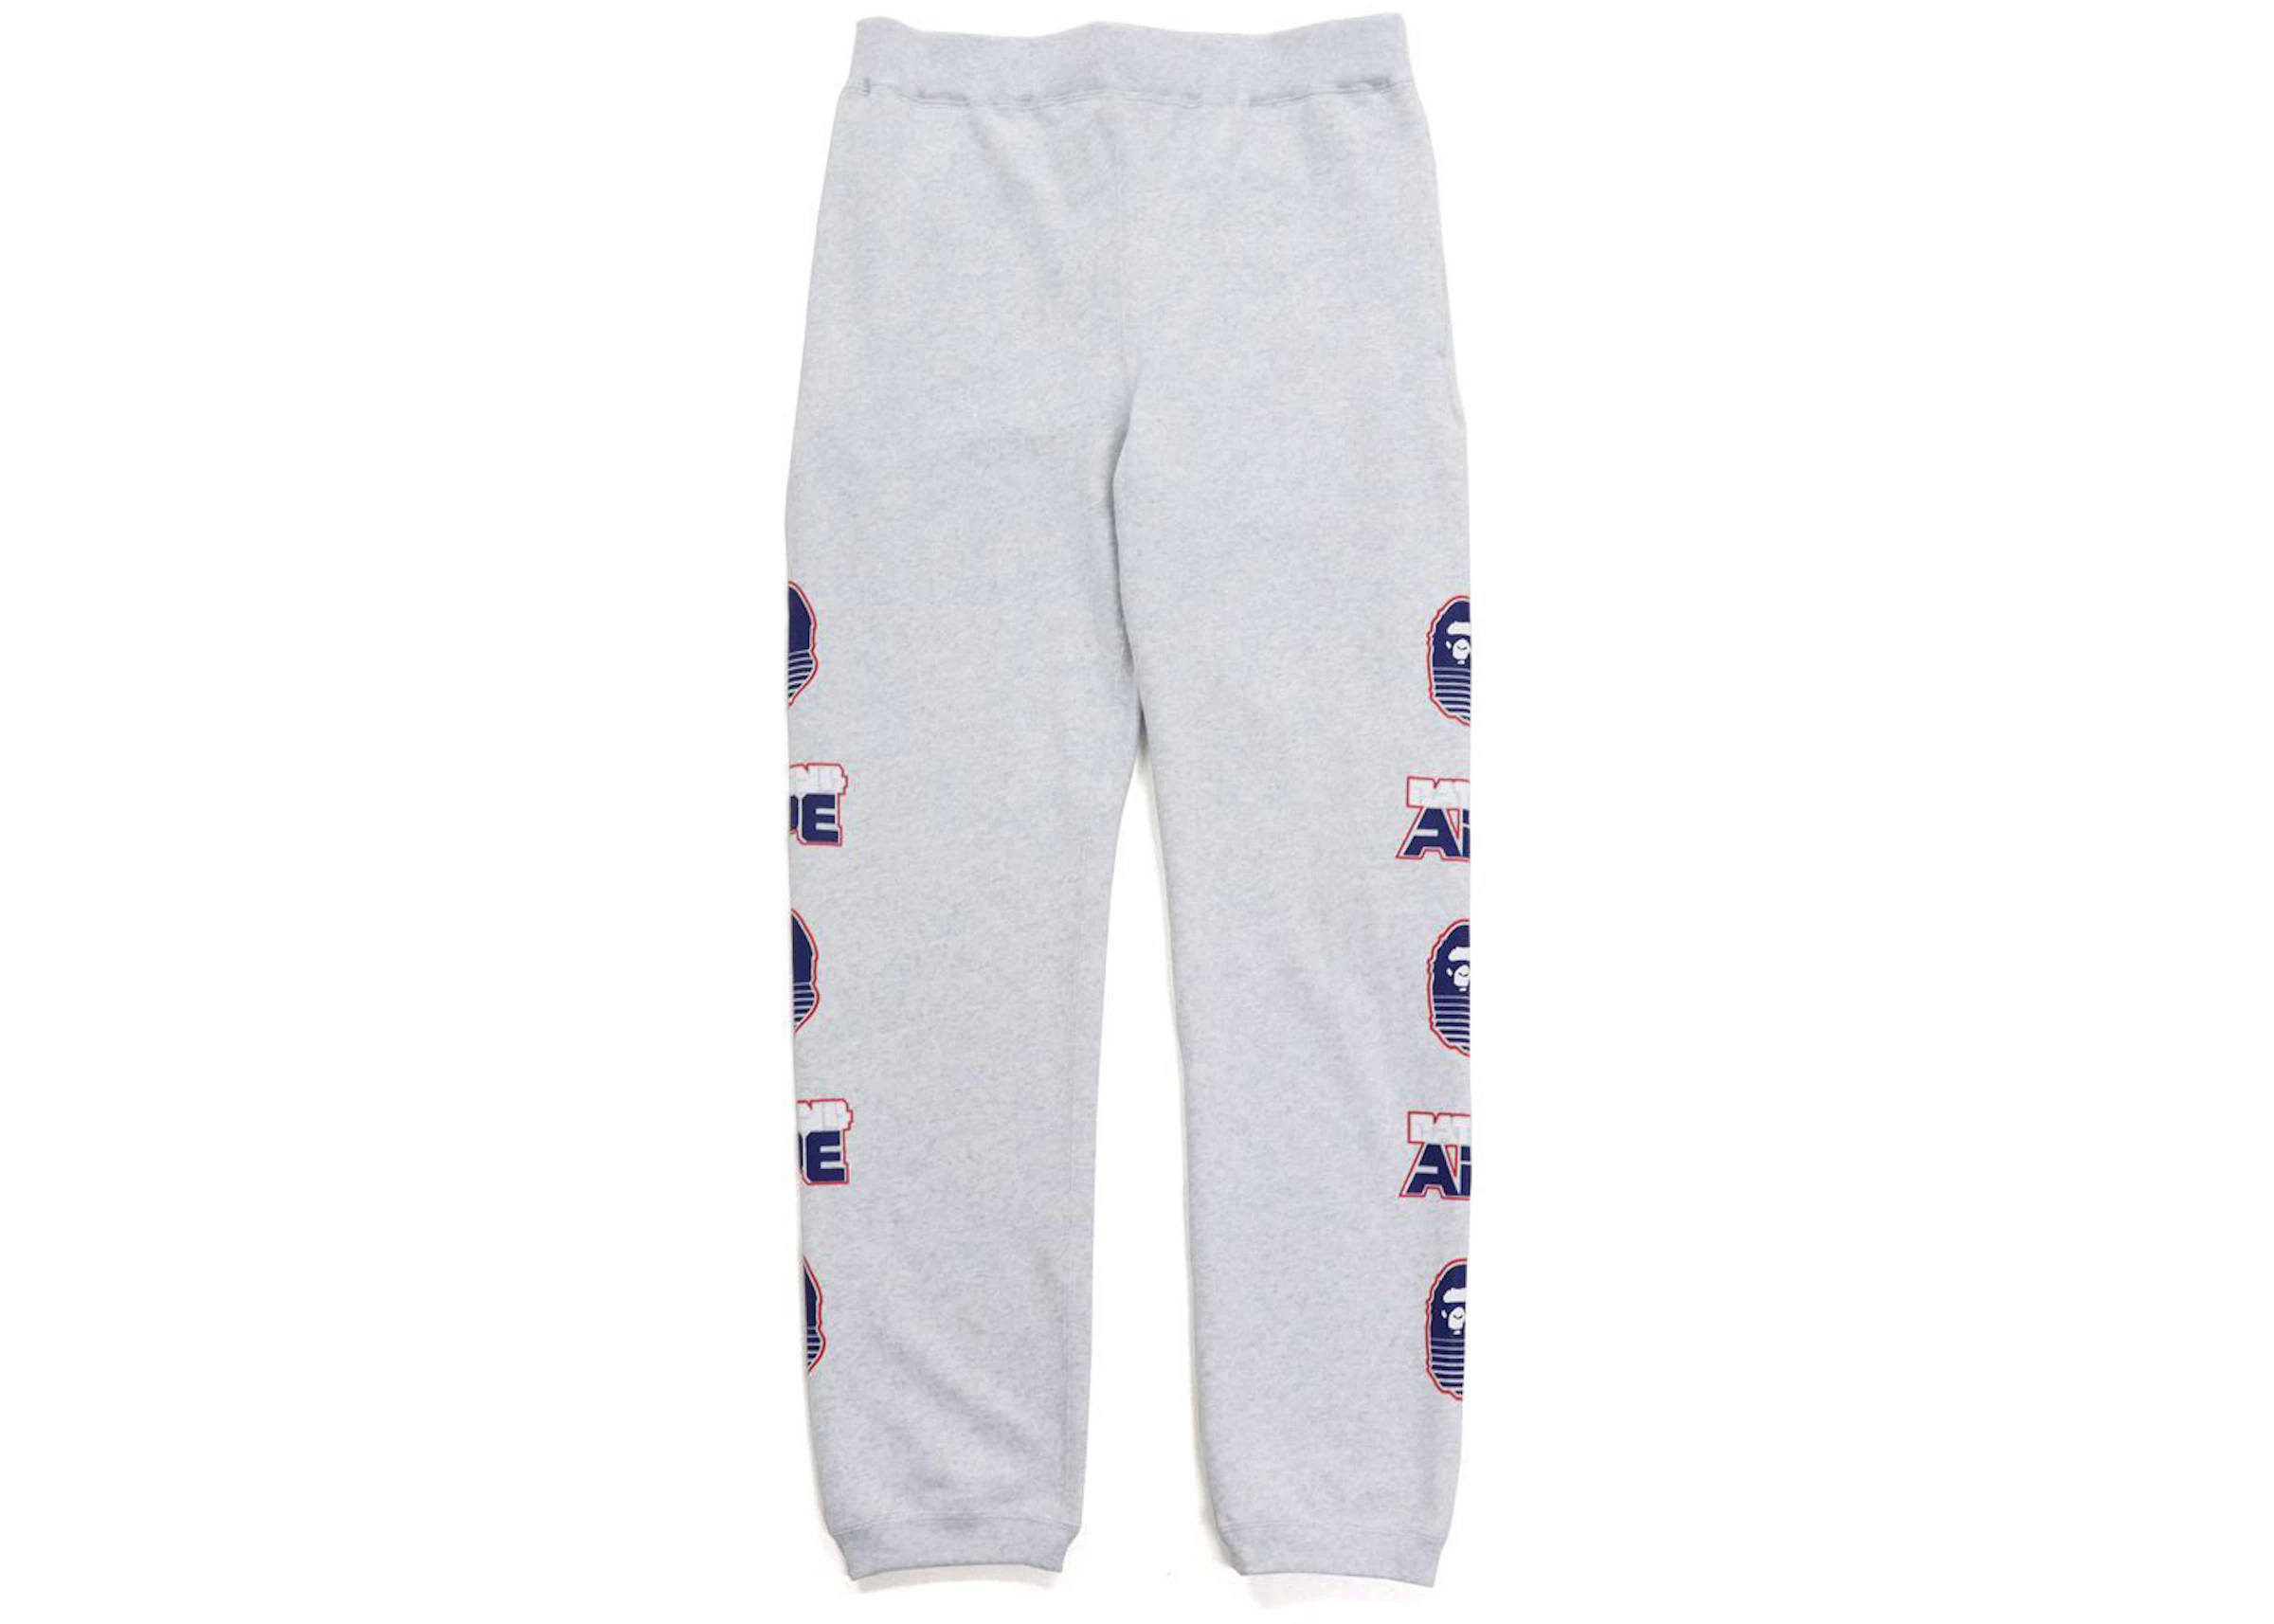 BAPE Graphic #1 Sweatpants Gray - FW21 - US